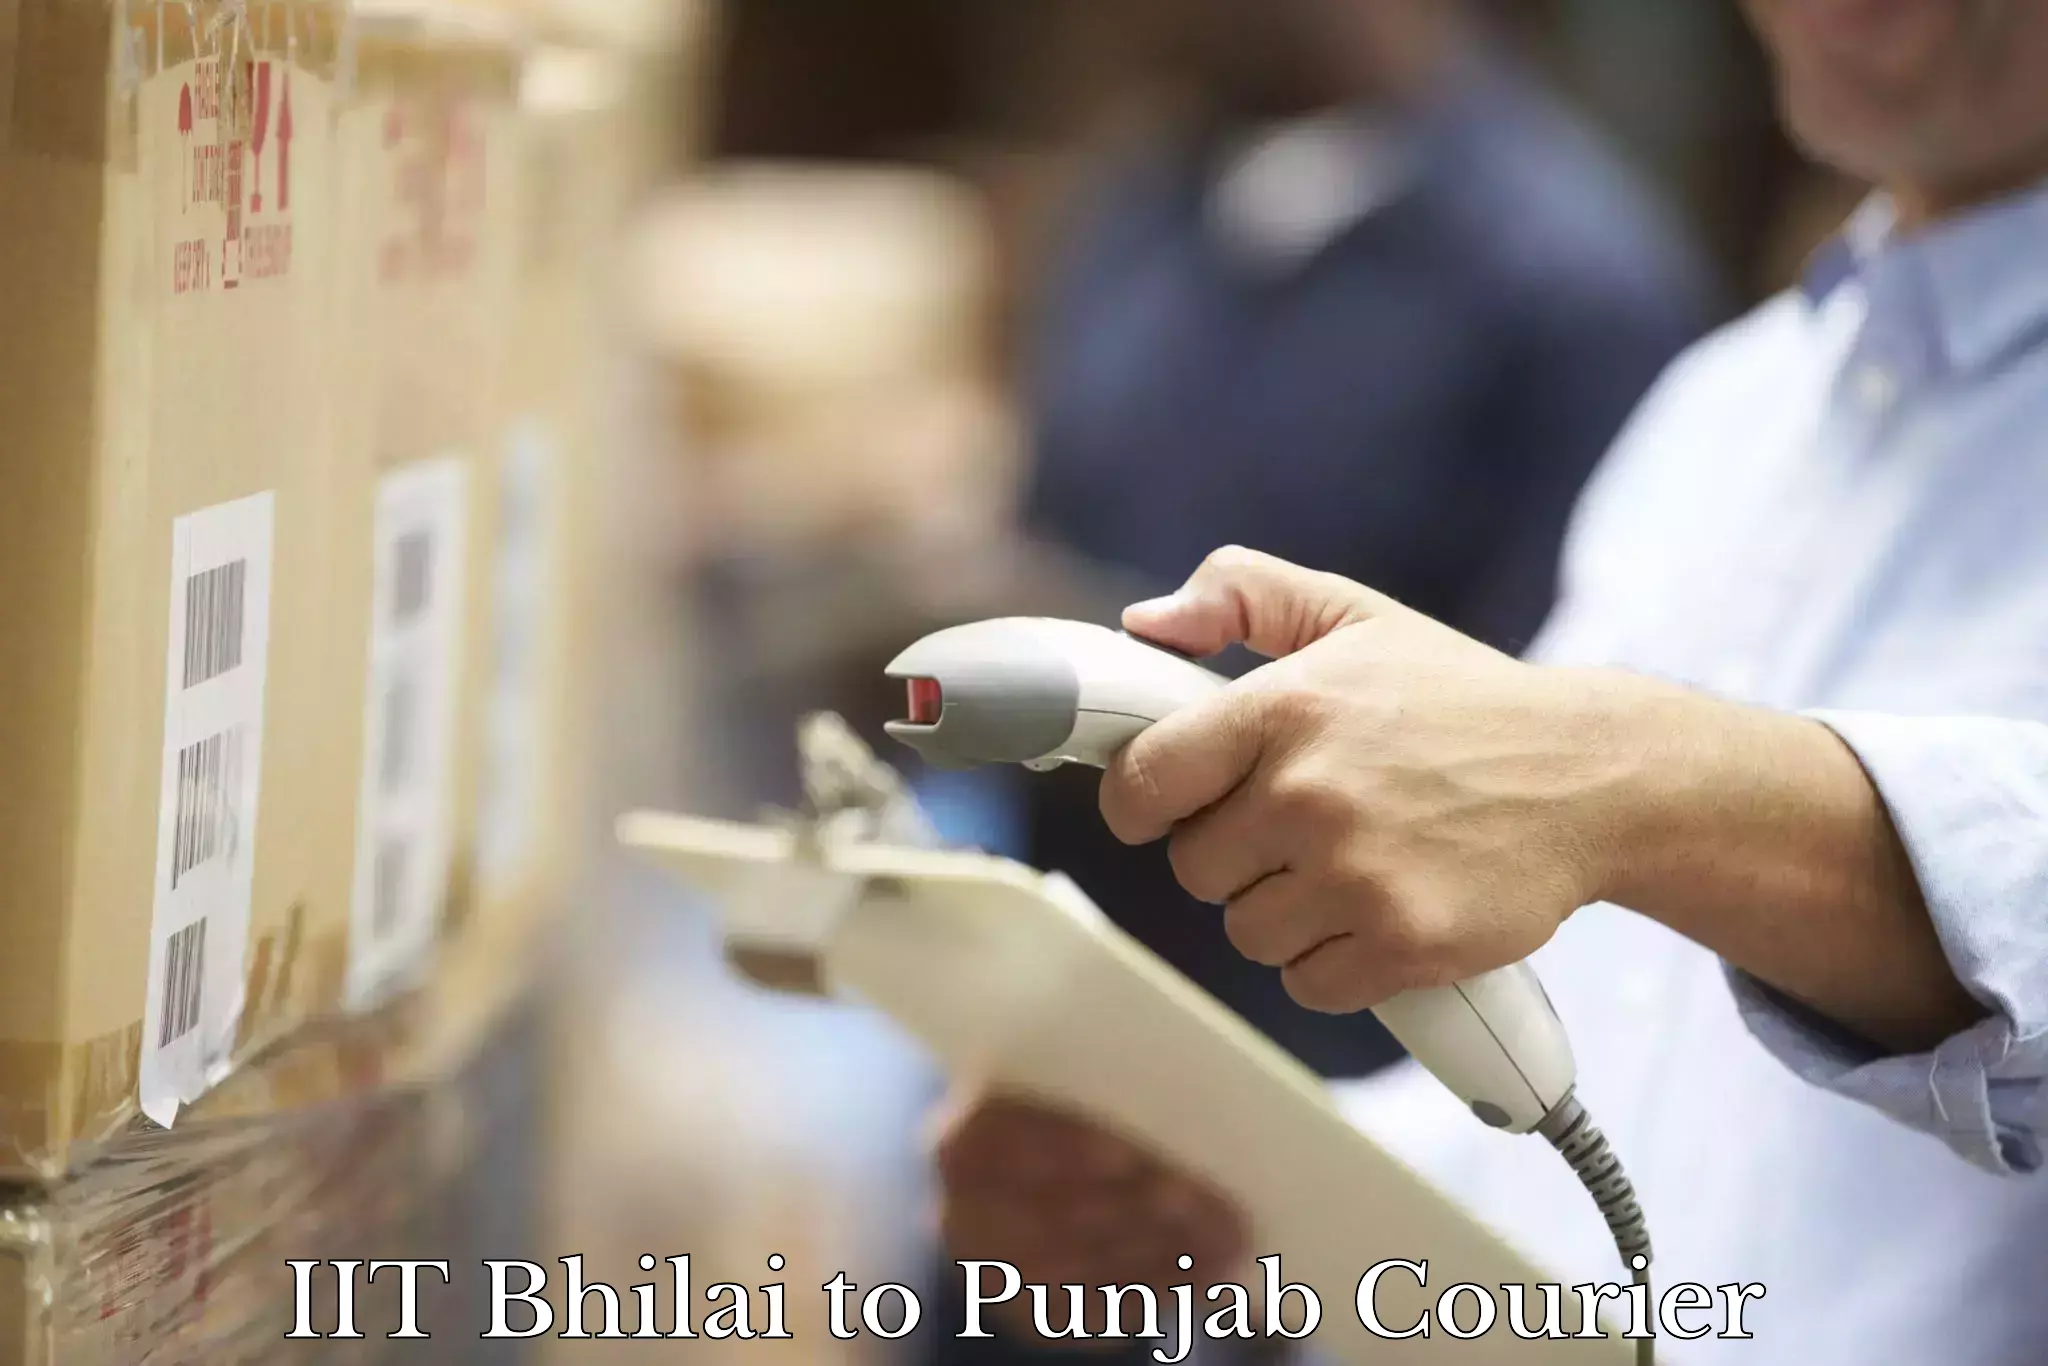 Express logistics service IIT Bhilai to Punjab